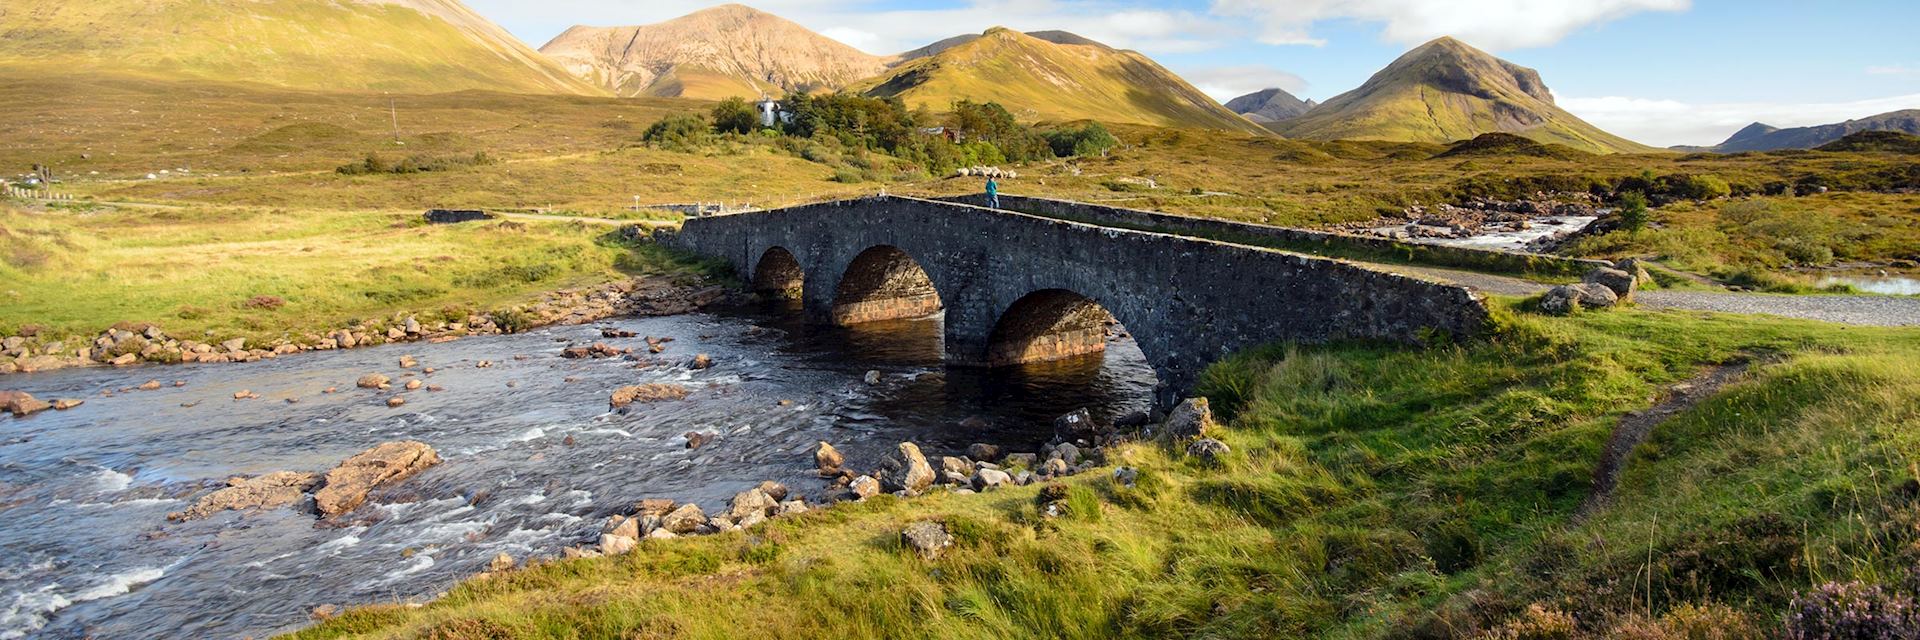 Sligachan Bridge, Isle of Skye, Scotland